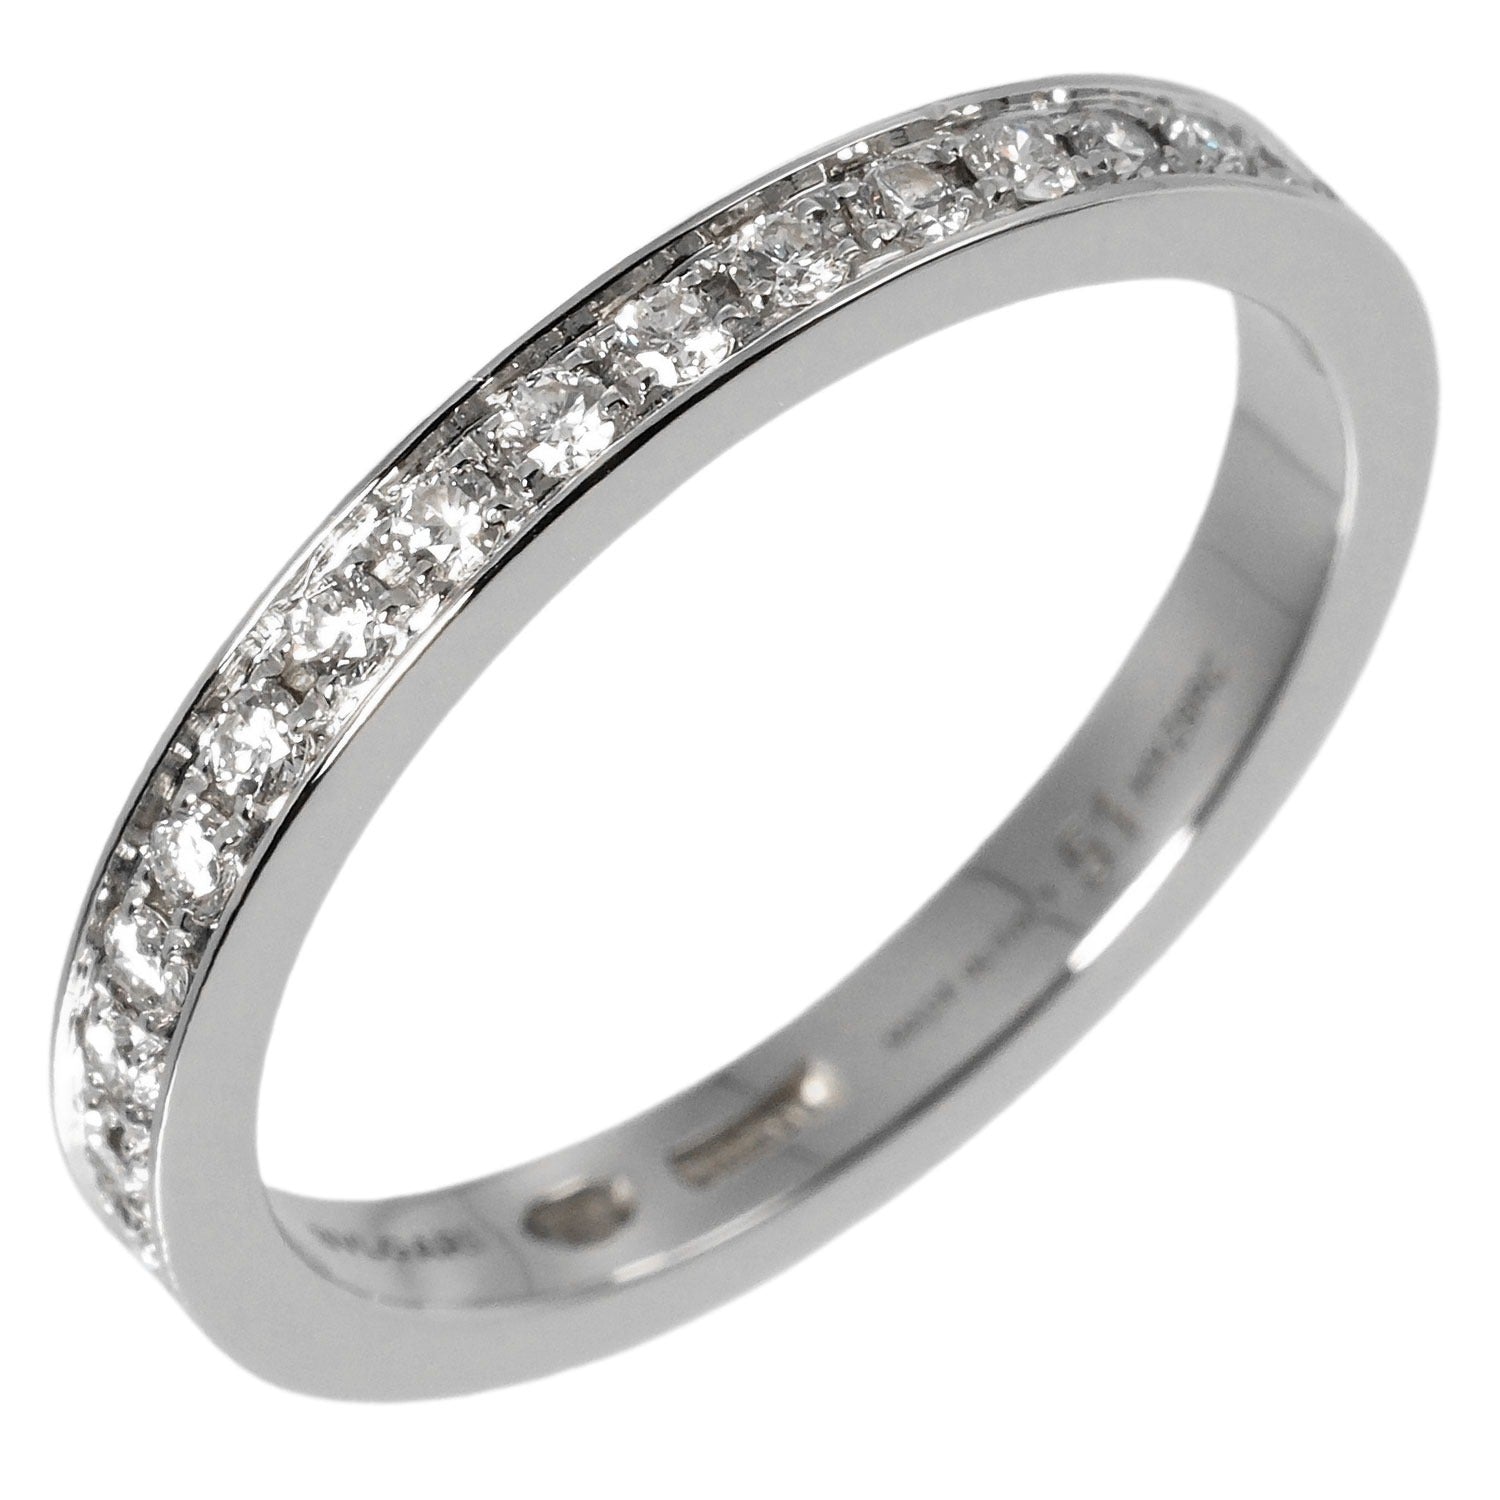 [LuxUness]  BVLGARI Dedicate to Venice 3.72g Size 11 Ring, Platinum Pt950, Diamond Half Eternity Metal Ring in Excellent condition